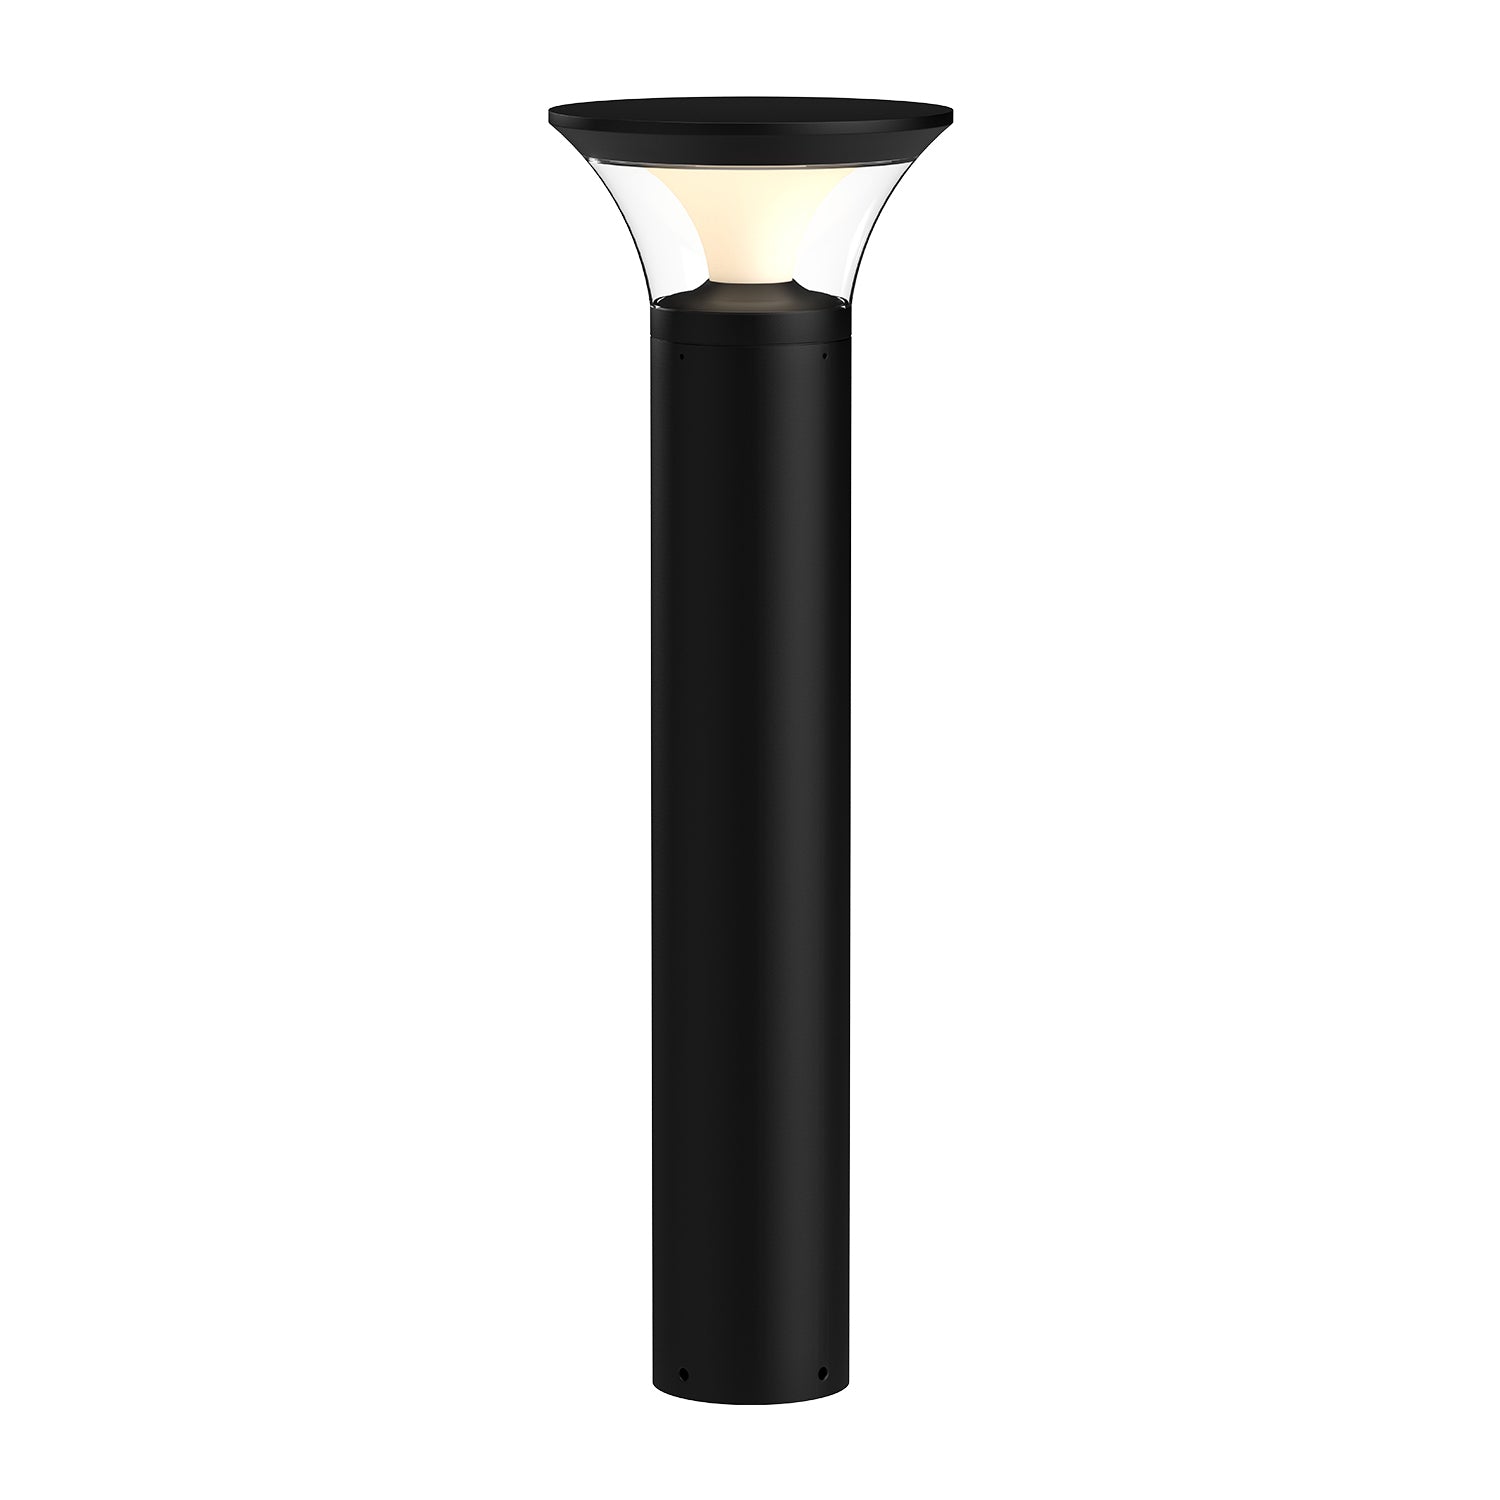 KINGSBURY Post lighting Black INTEGRATED LED - EB48941-BK | KUZCO